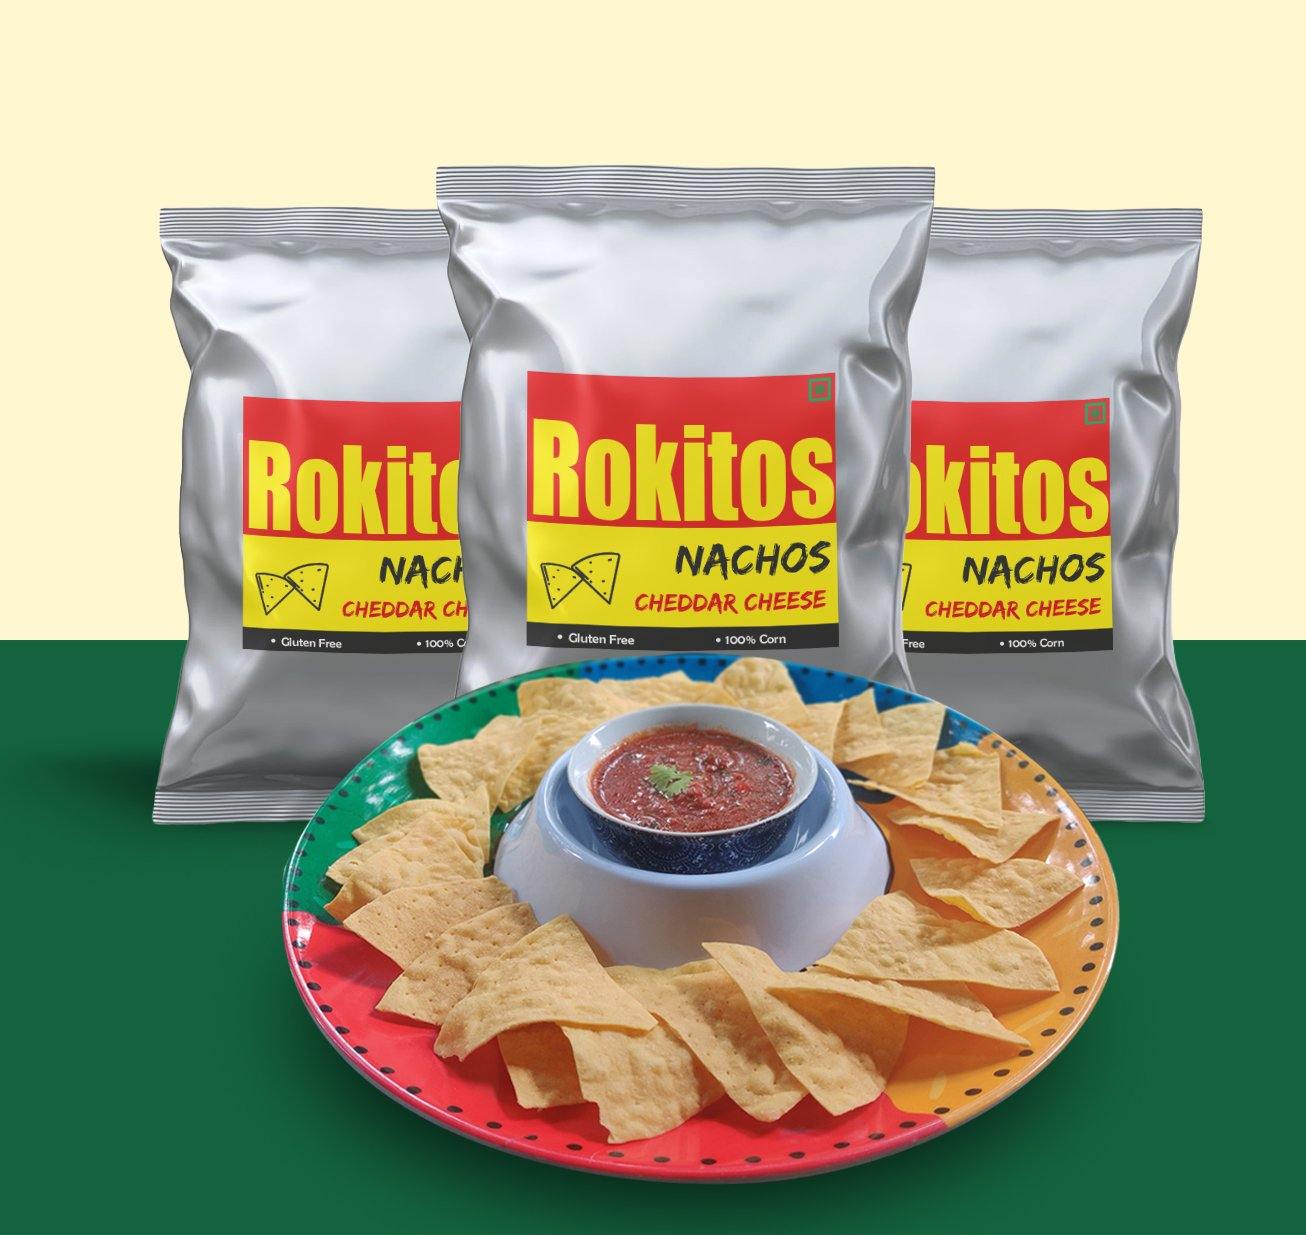 Rokitos- Nachos| Jain| Vegetarian| Crispy Nachos| Nachos Chips| Mexican Dish| Cheddar Cheese| Cheddar Cheese Nachos| Mexican beans| Rokitos Nachos| Red Salsa